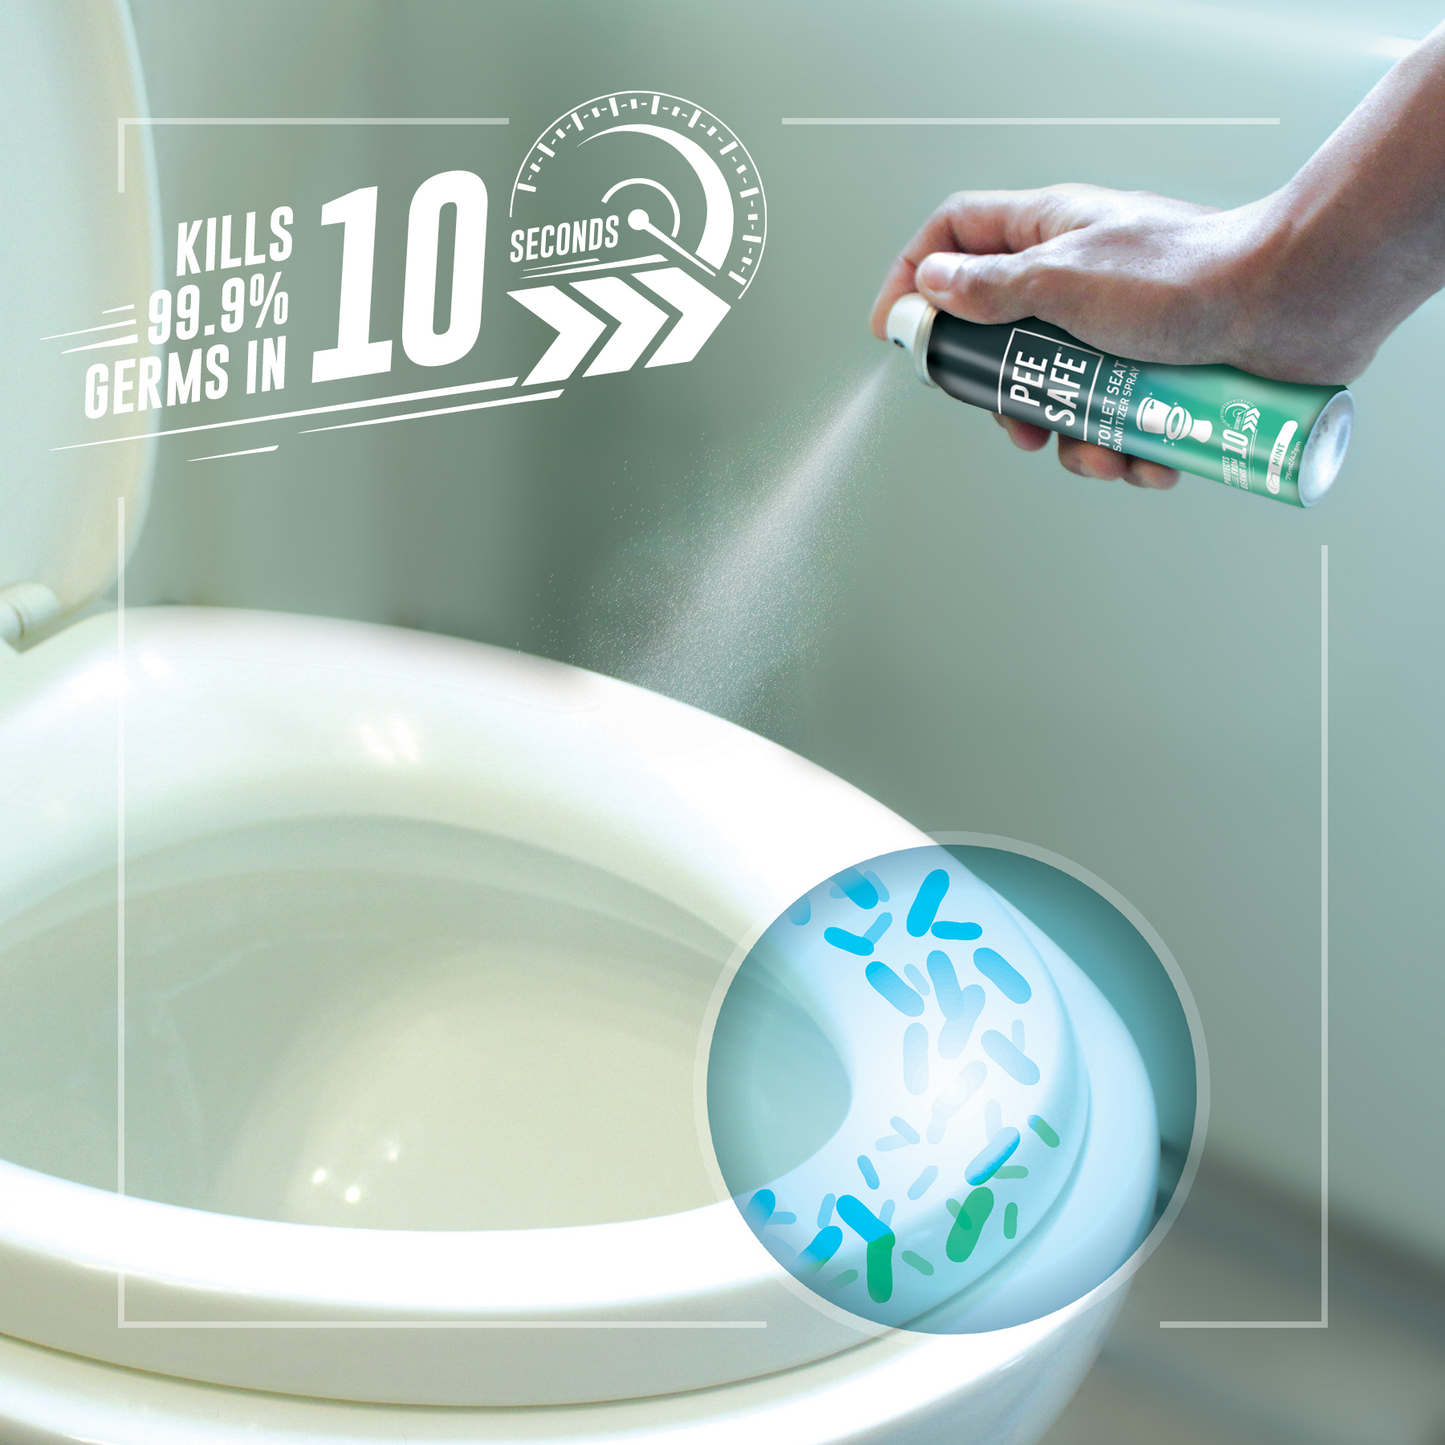 Pee Safe - Toilet Seat Sanitizer Spray 75 ML Mint (Pack of 3)